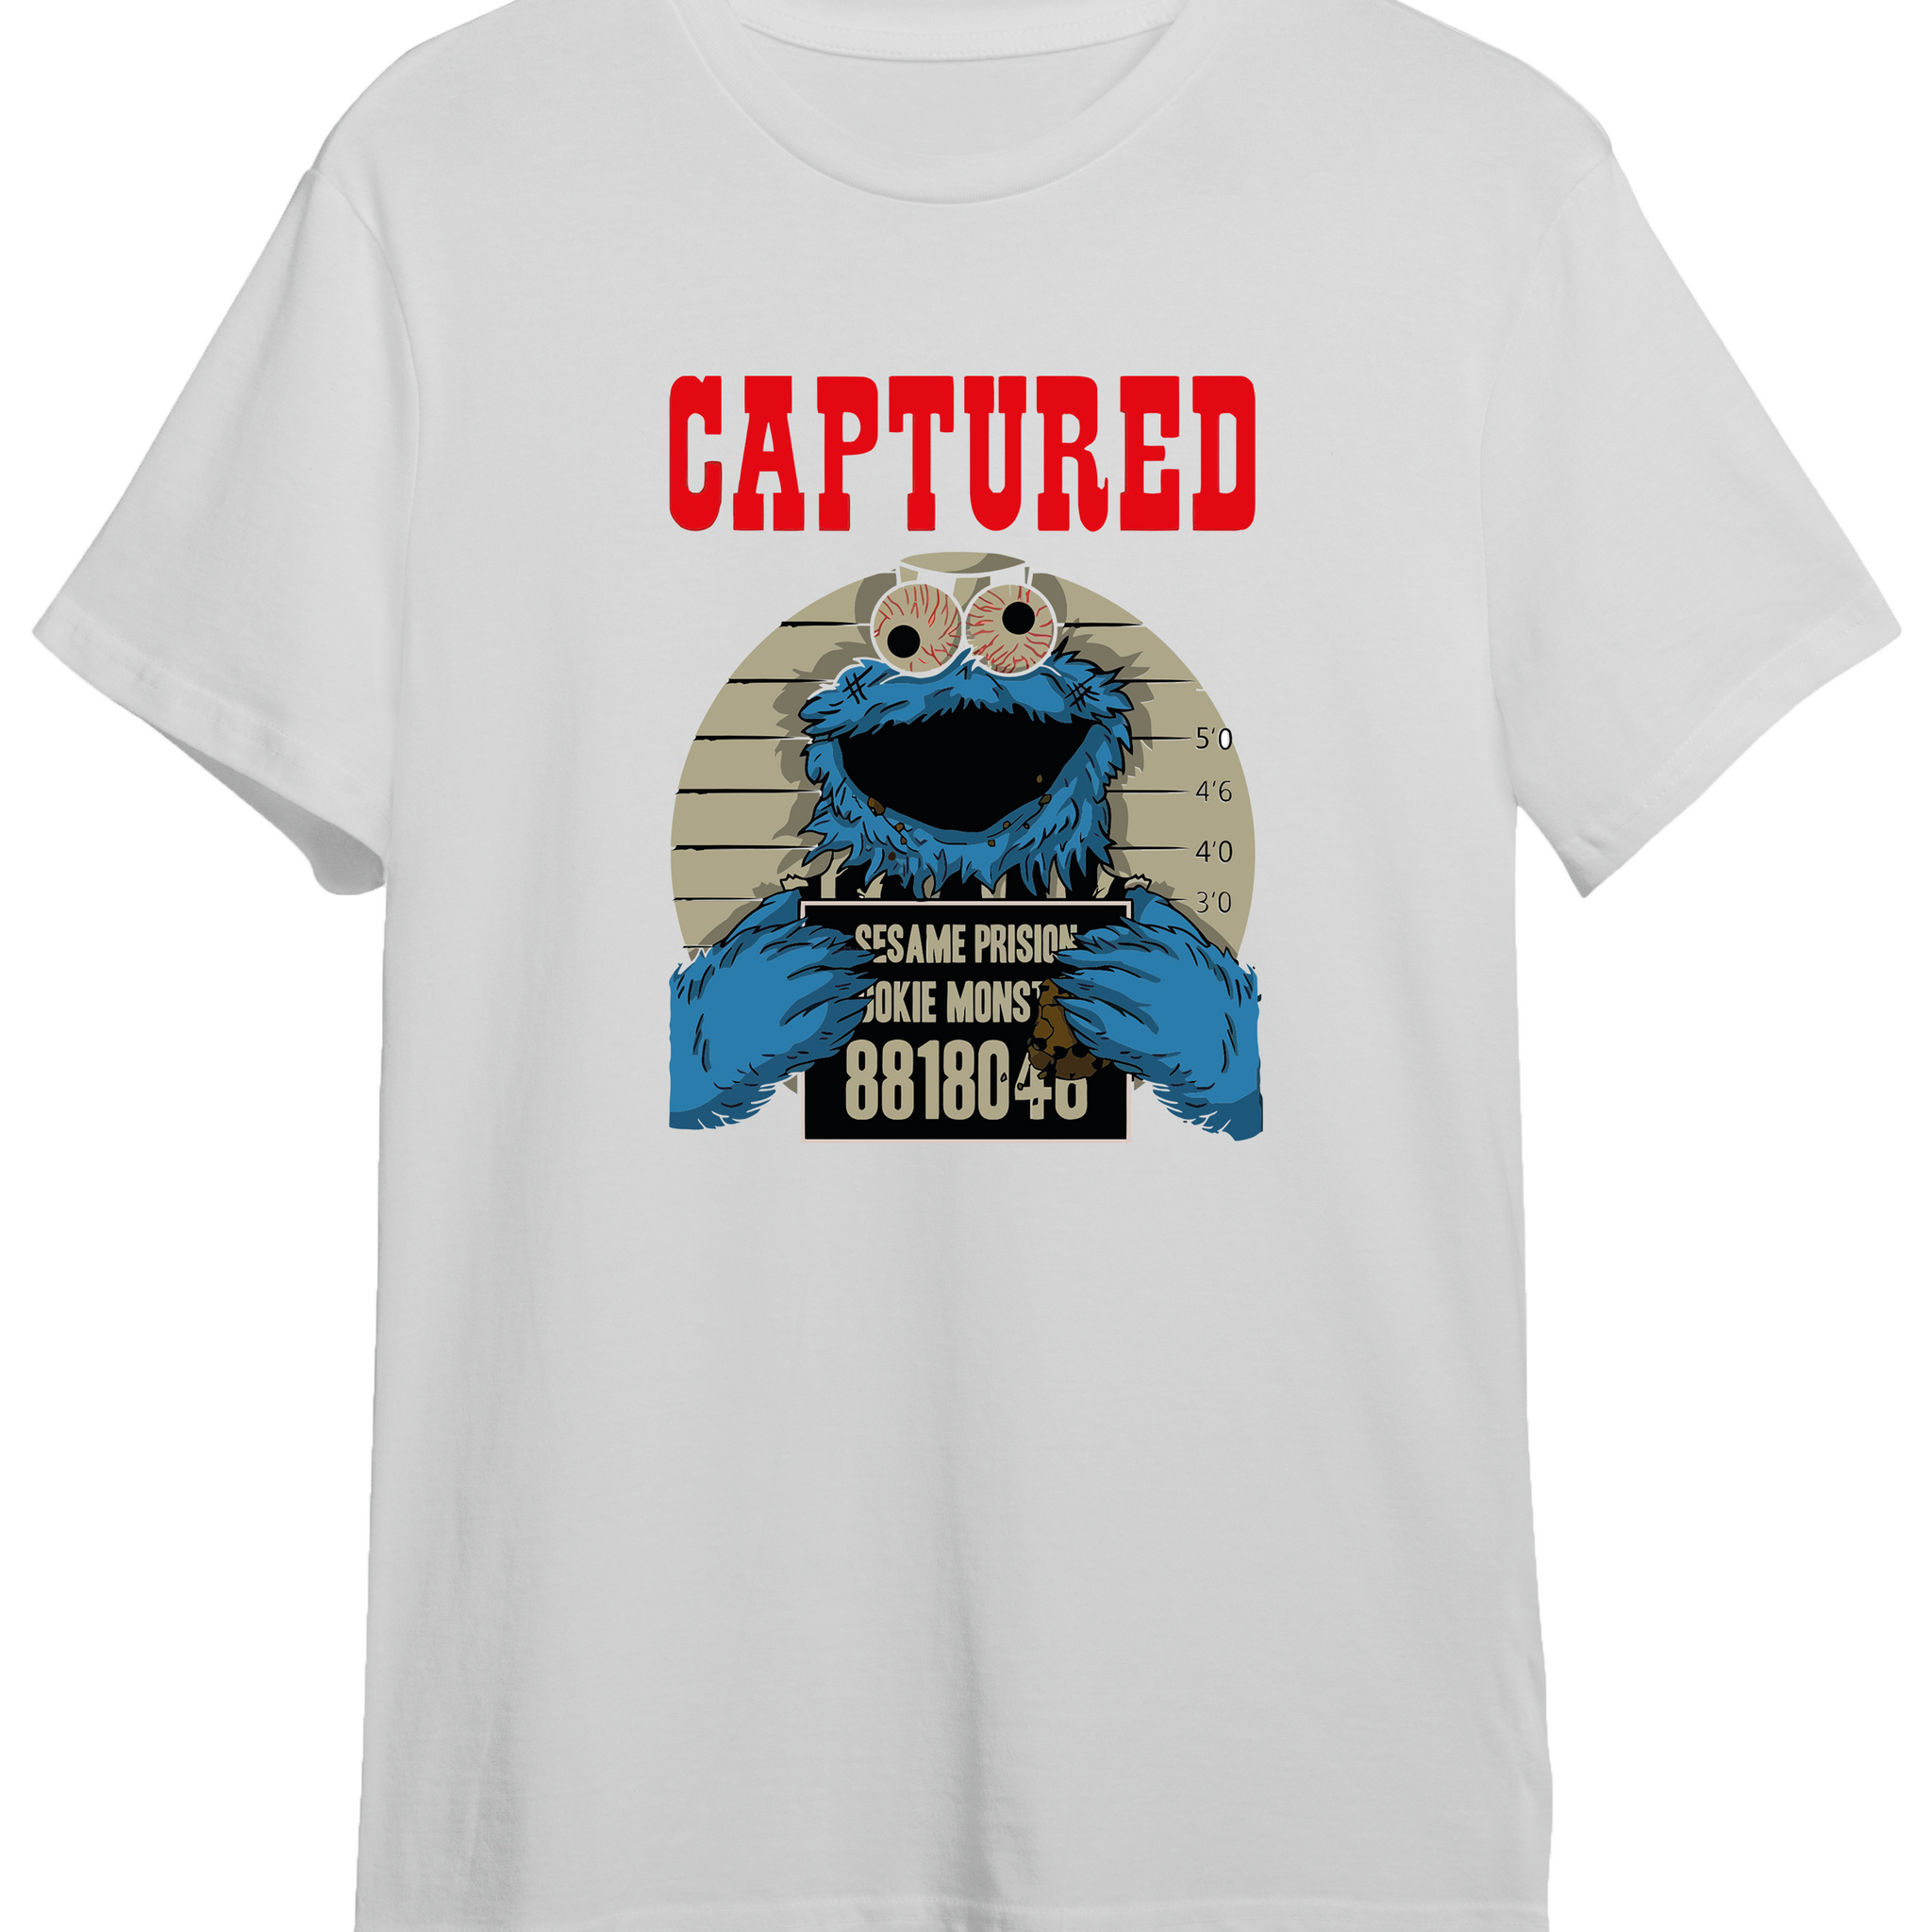 Cookie Monster - Regular Tshirt